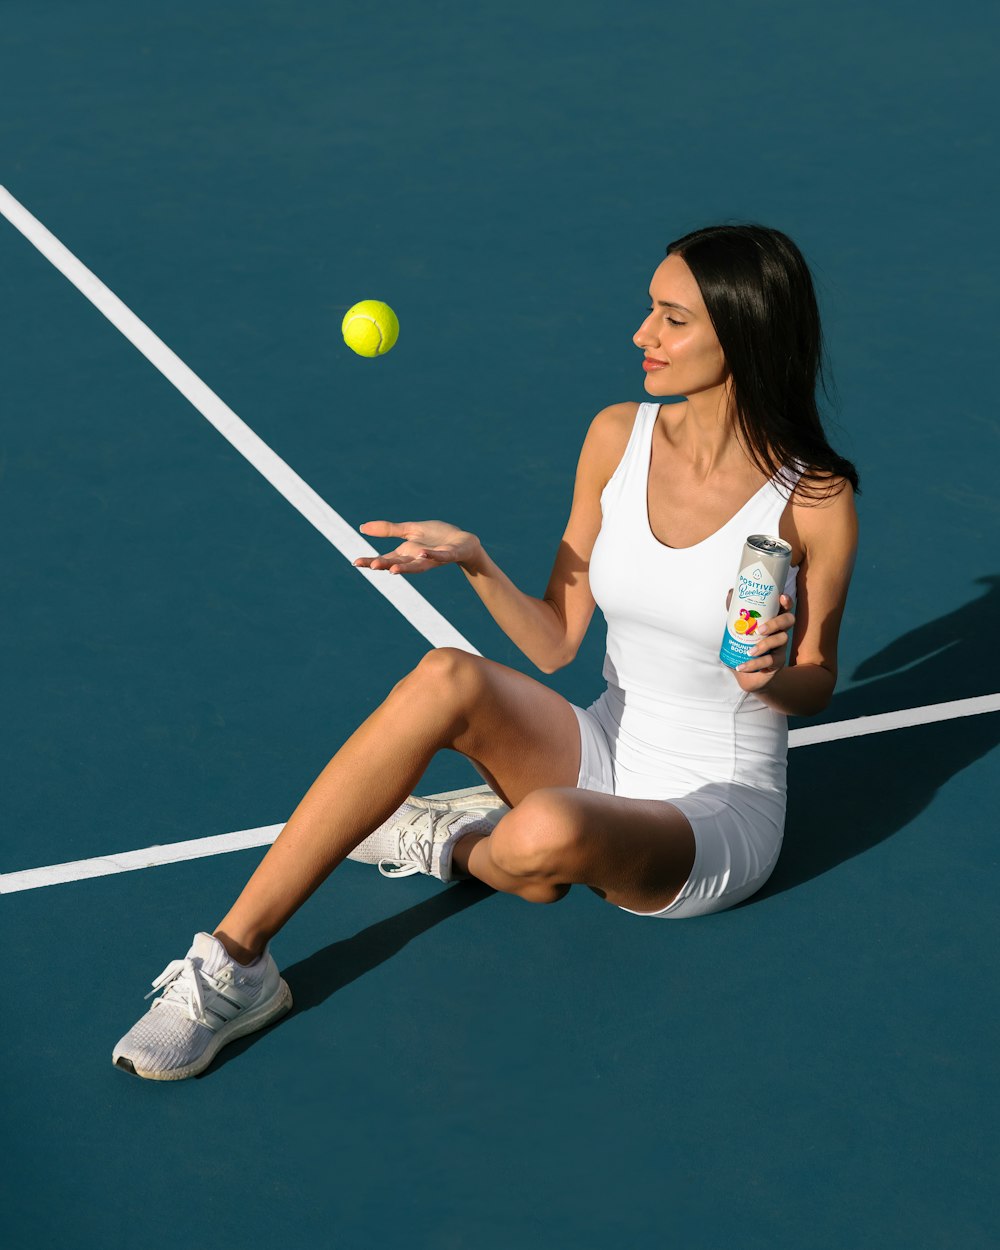 a woman sitting on a tennis court holding a tennis racquet